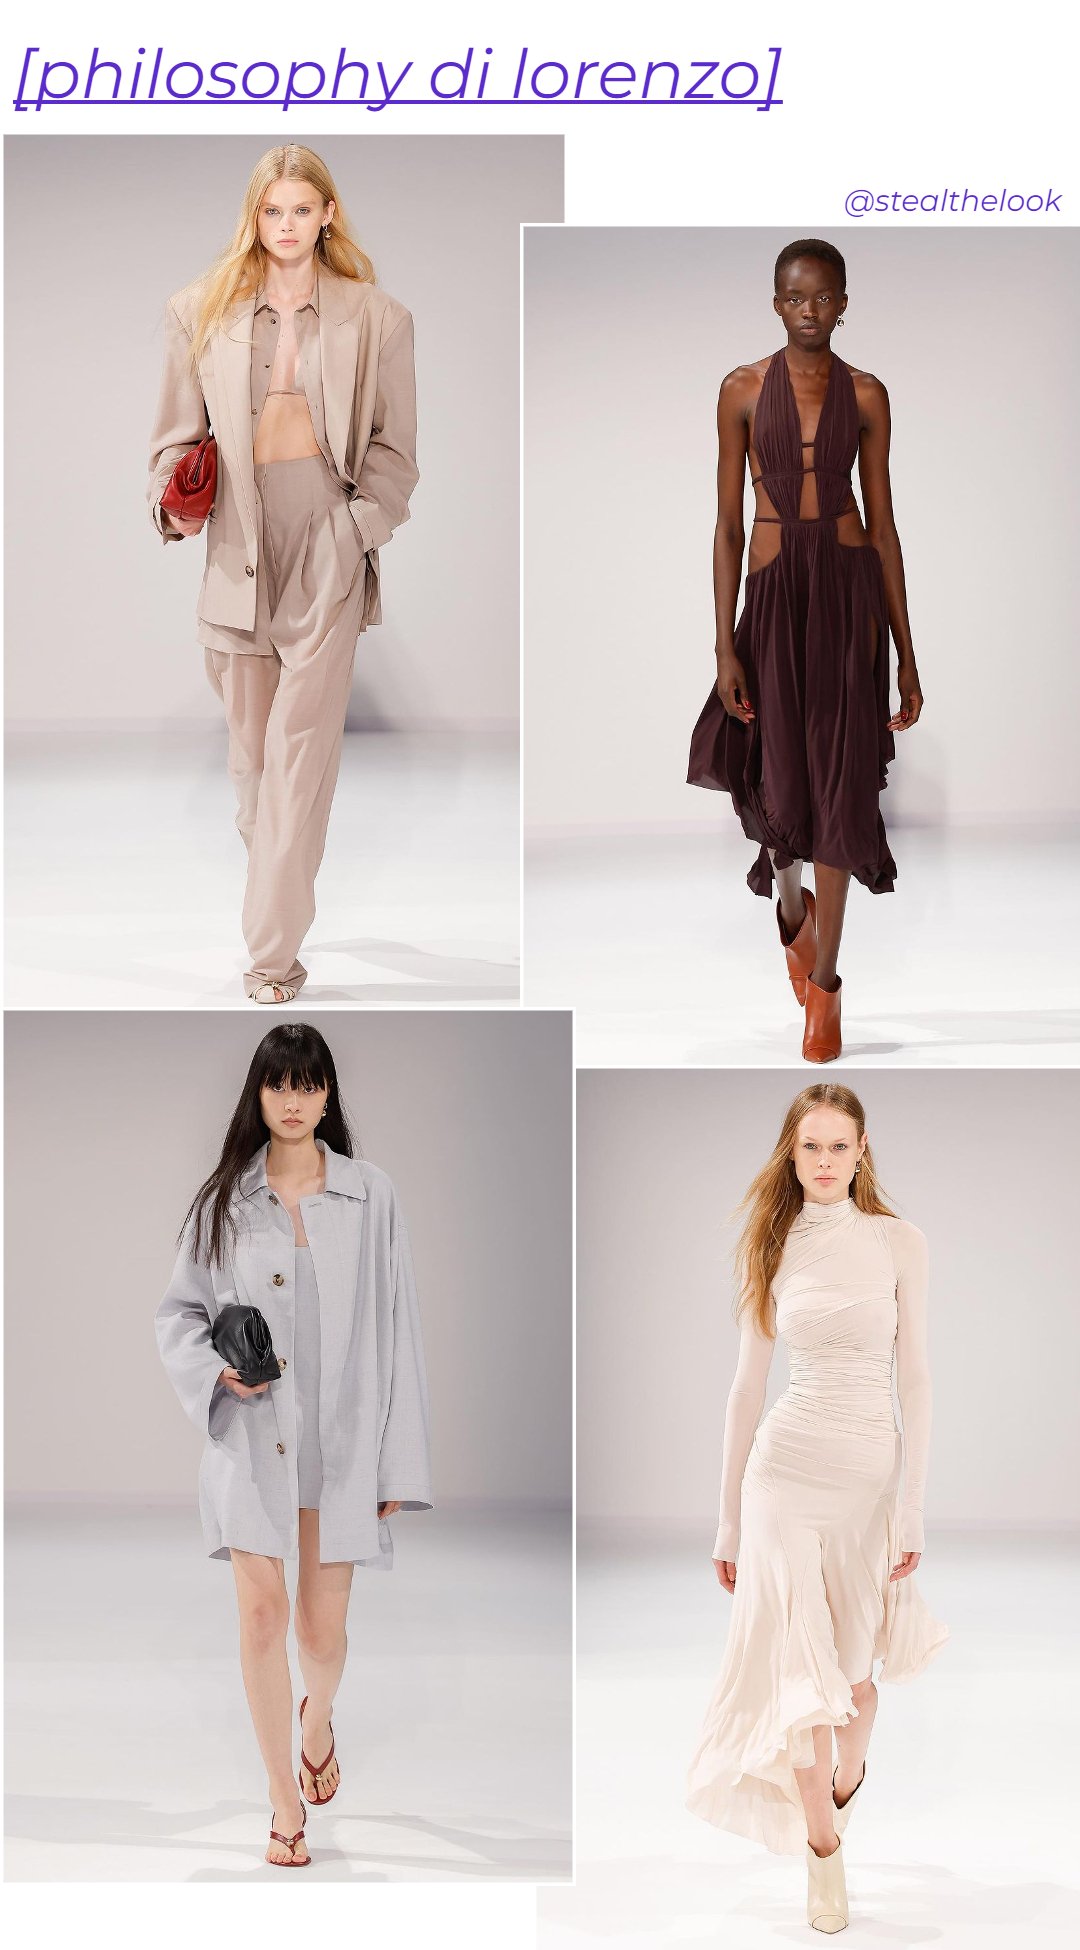 Philosophy di Lorenzo - roupas diversas - Milano Fashion Week - primavera - colagem de imagens - https://stealthelook.com.br